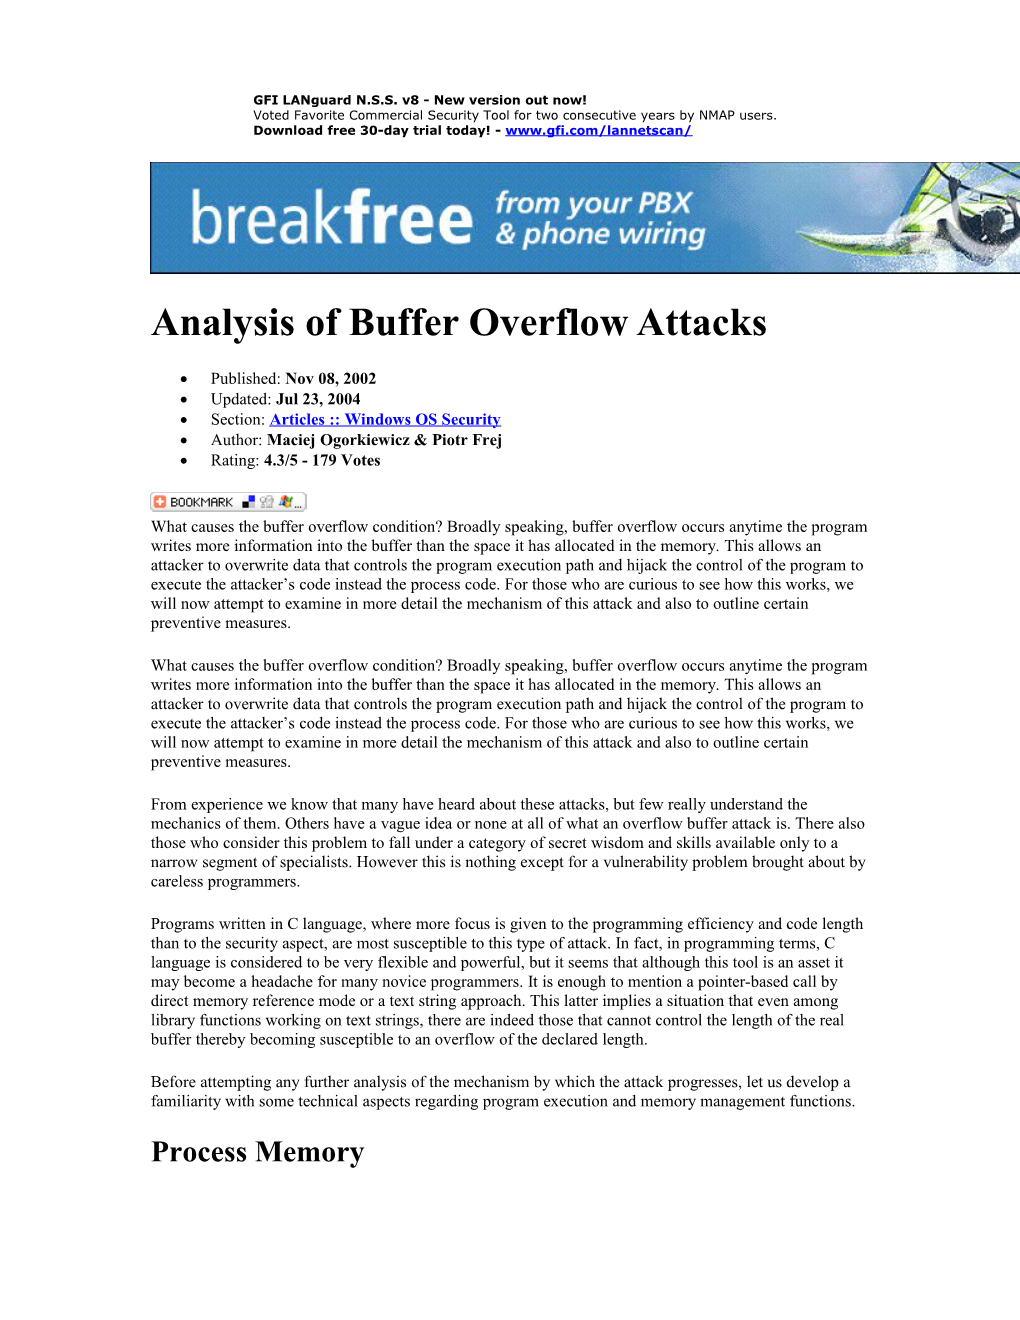 Analysis of Buffer Overflow Attacks